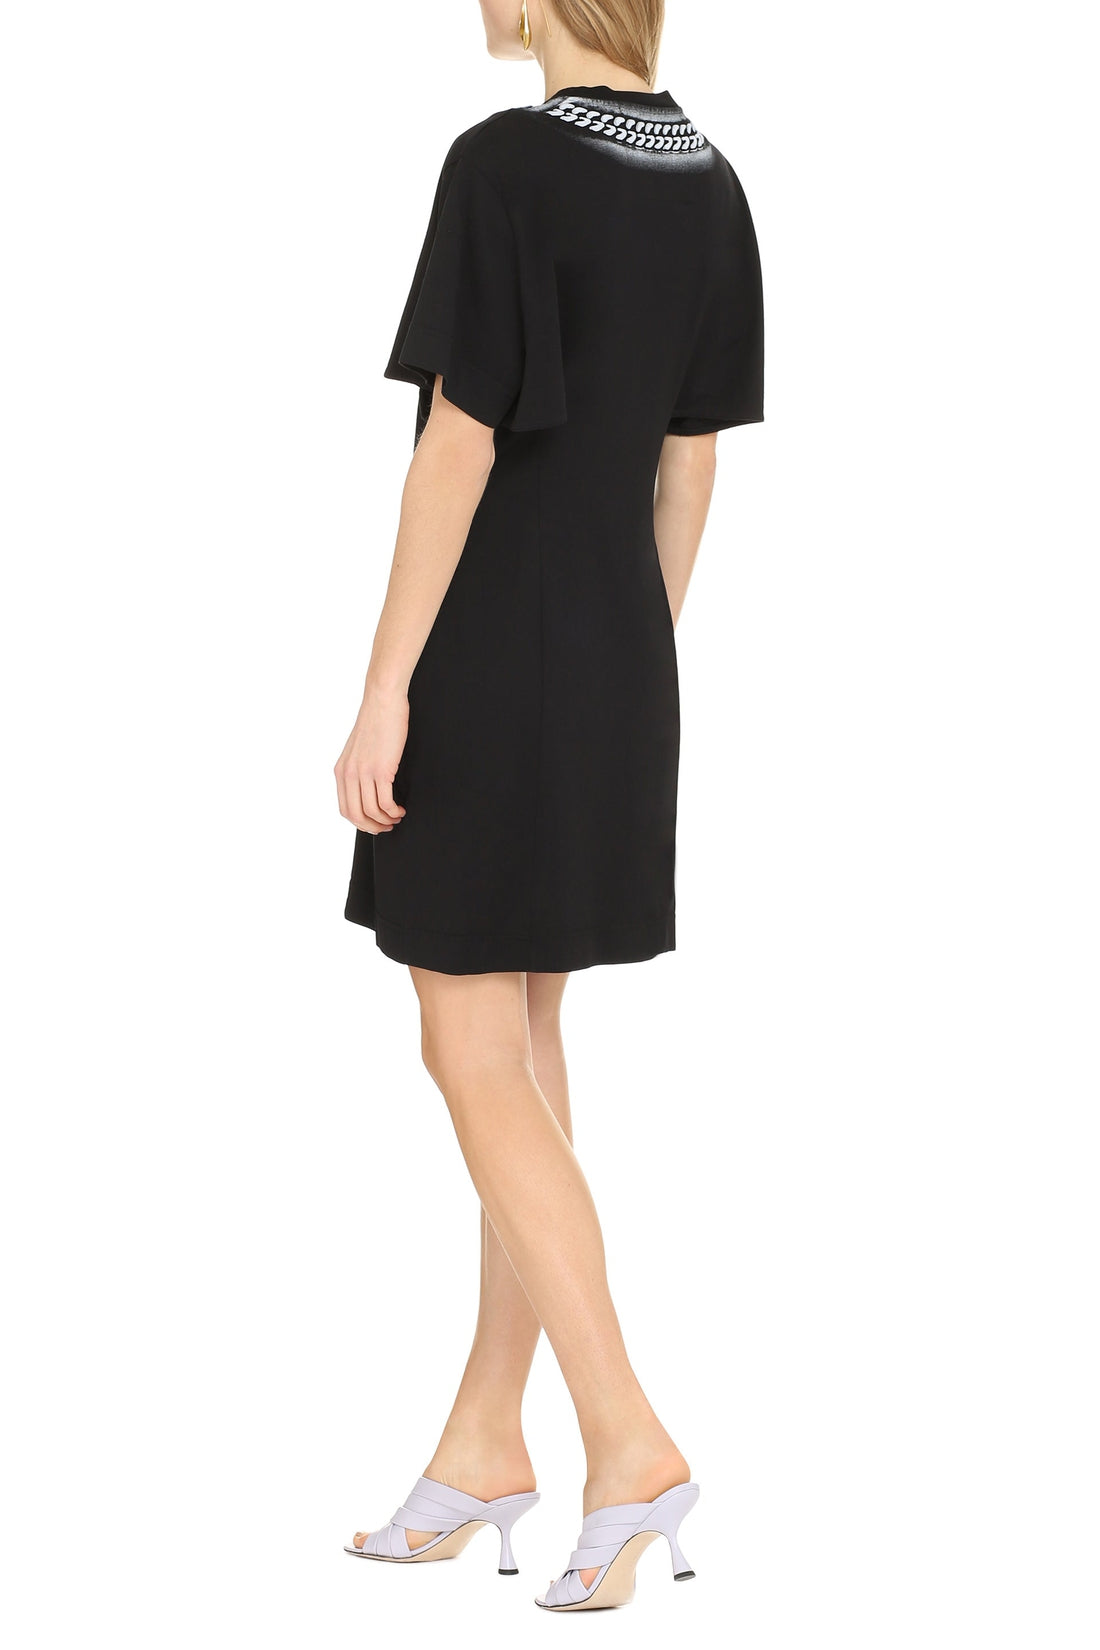 Givenchy-OUTLET-SALE-Jersey dress-ARCHIVIST